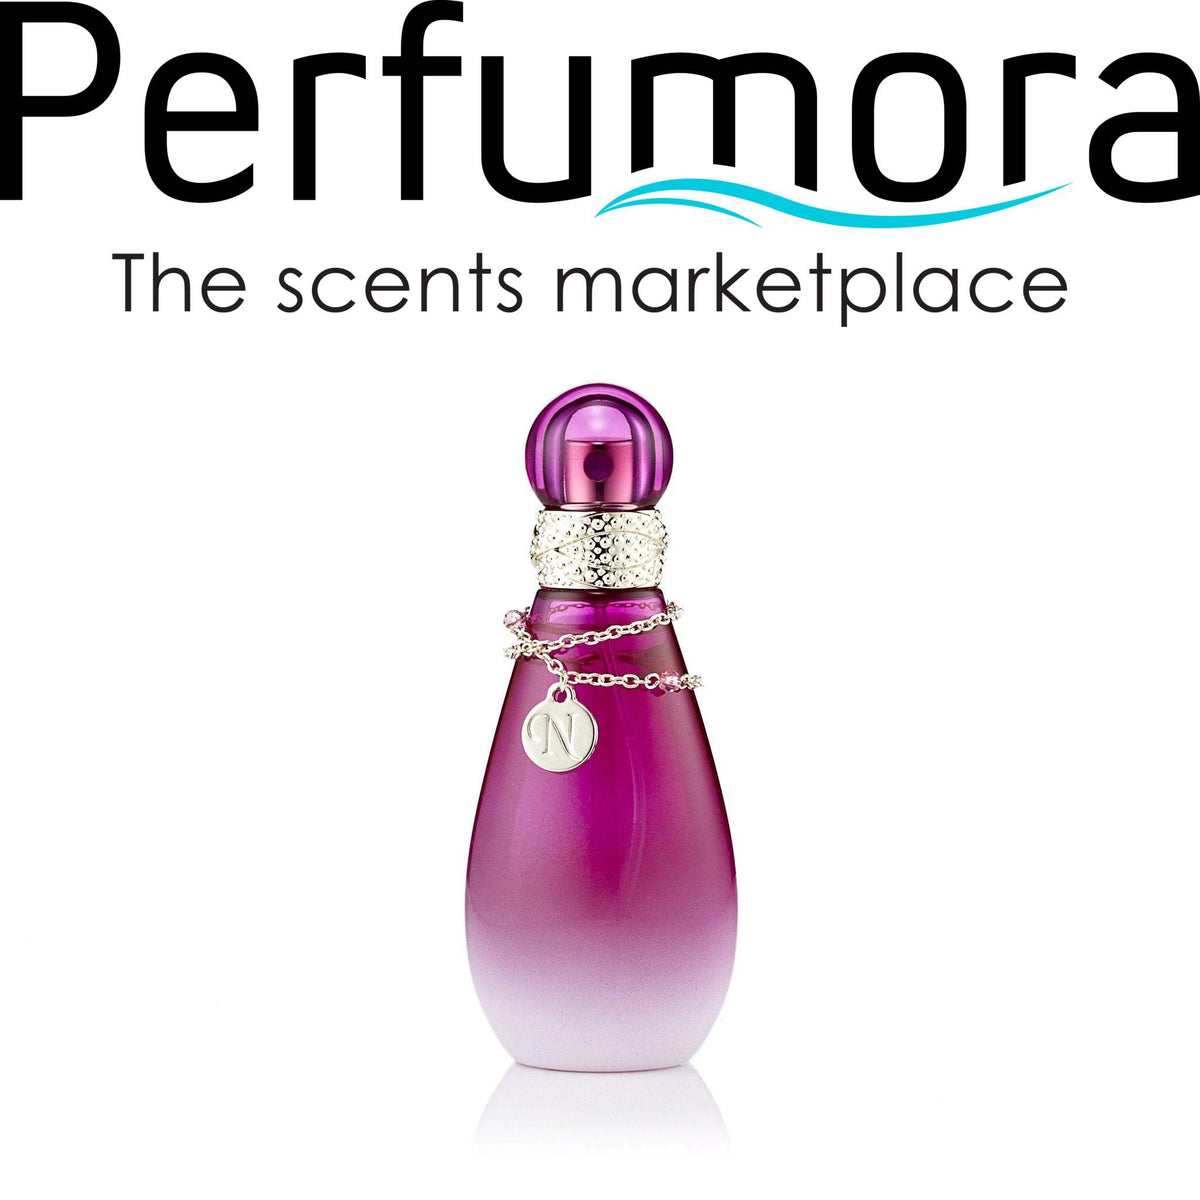 The Nice Remix Eau de Parfum Spray for Women by Britney Spears 1.7 oz.